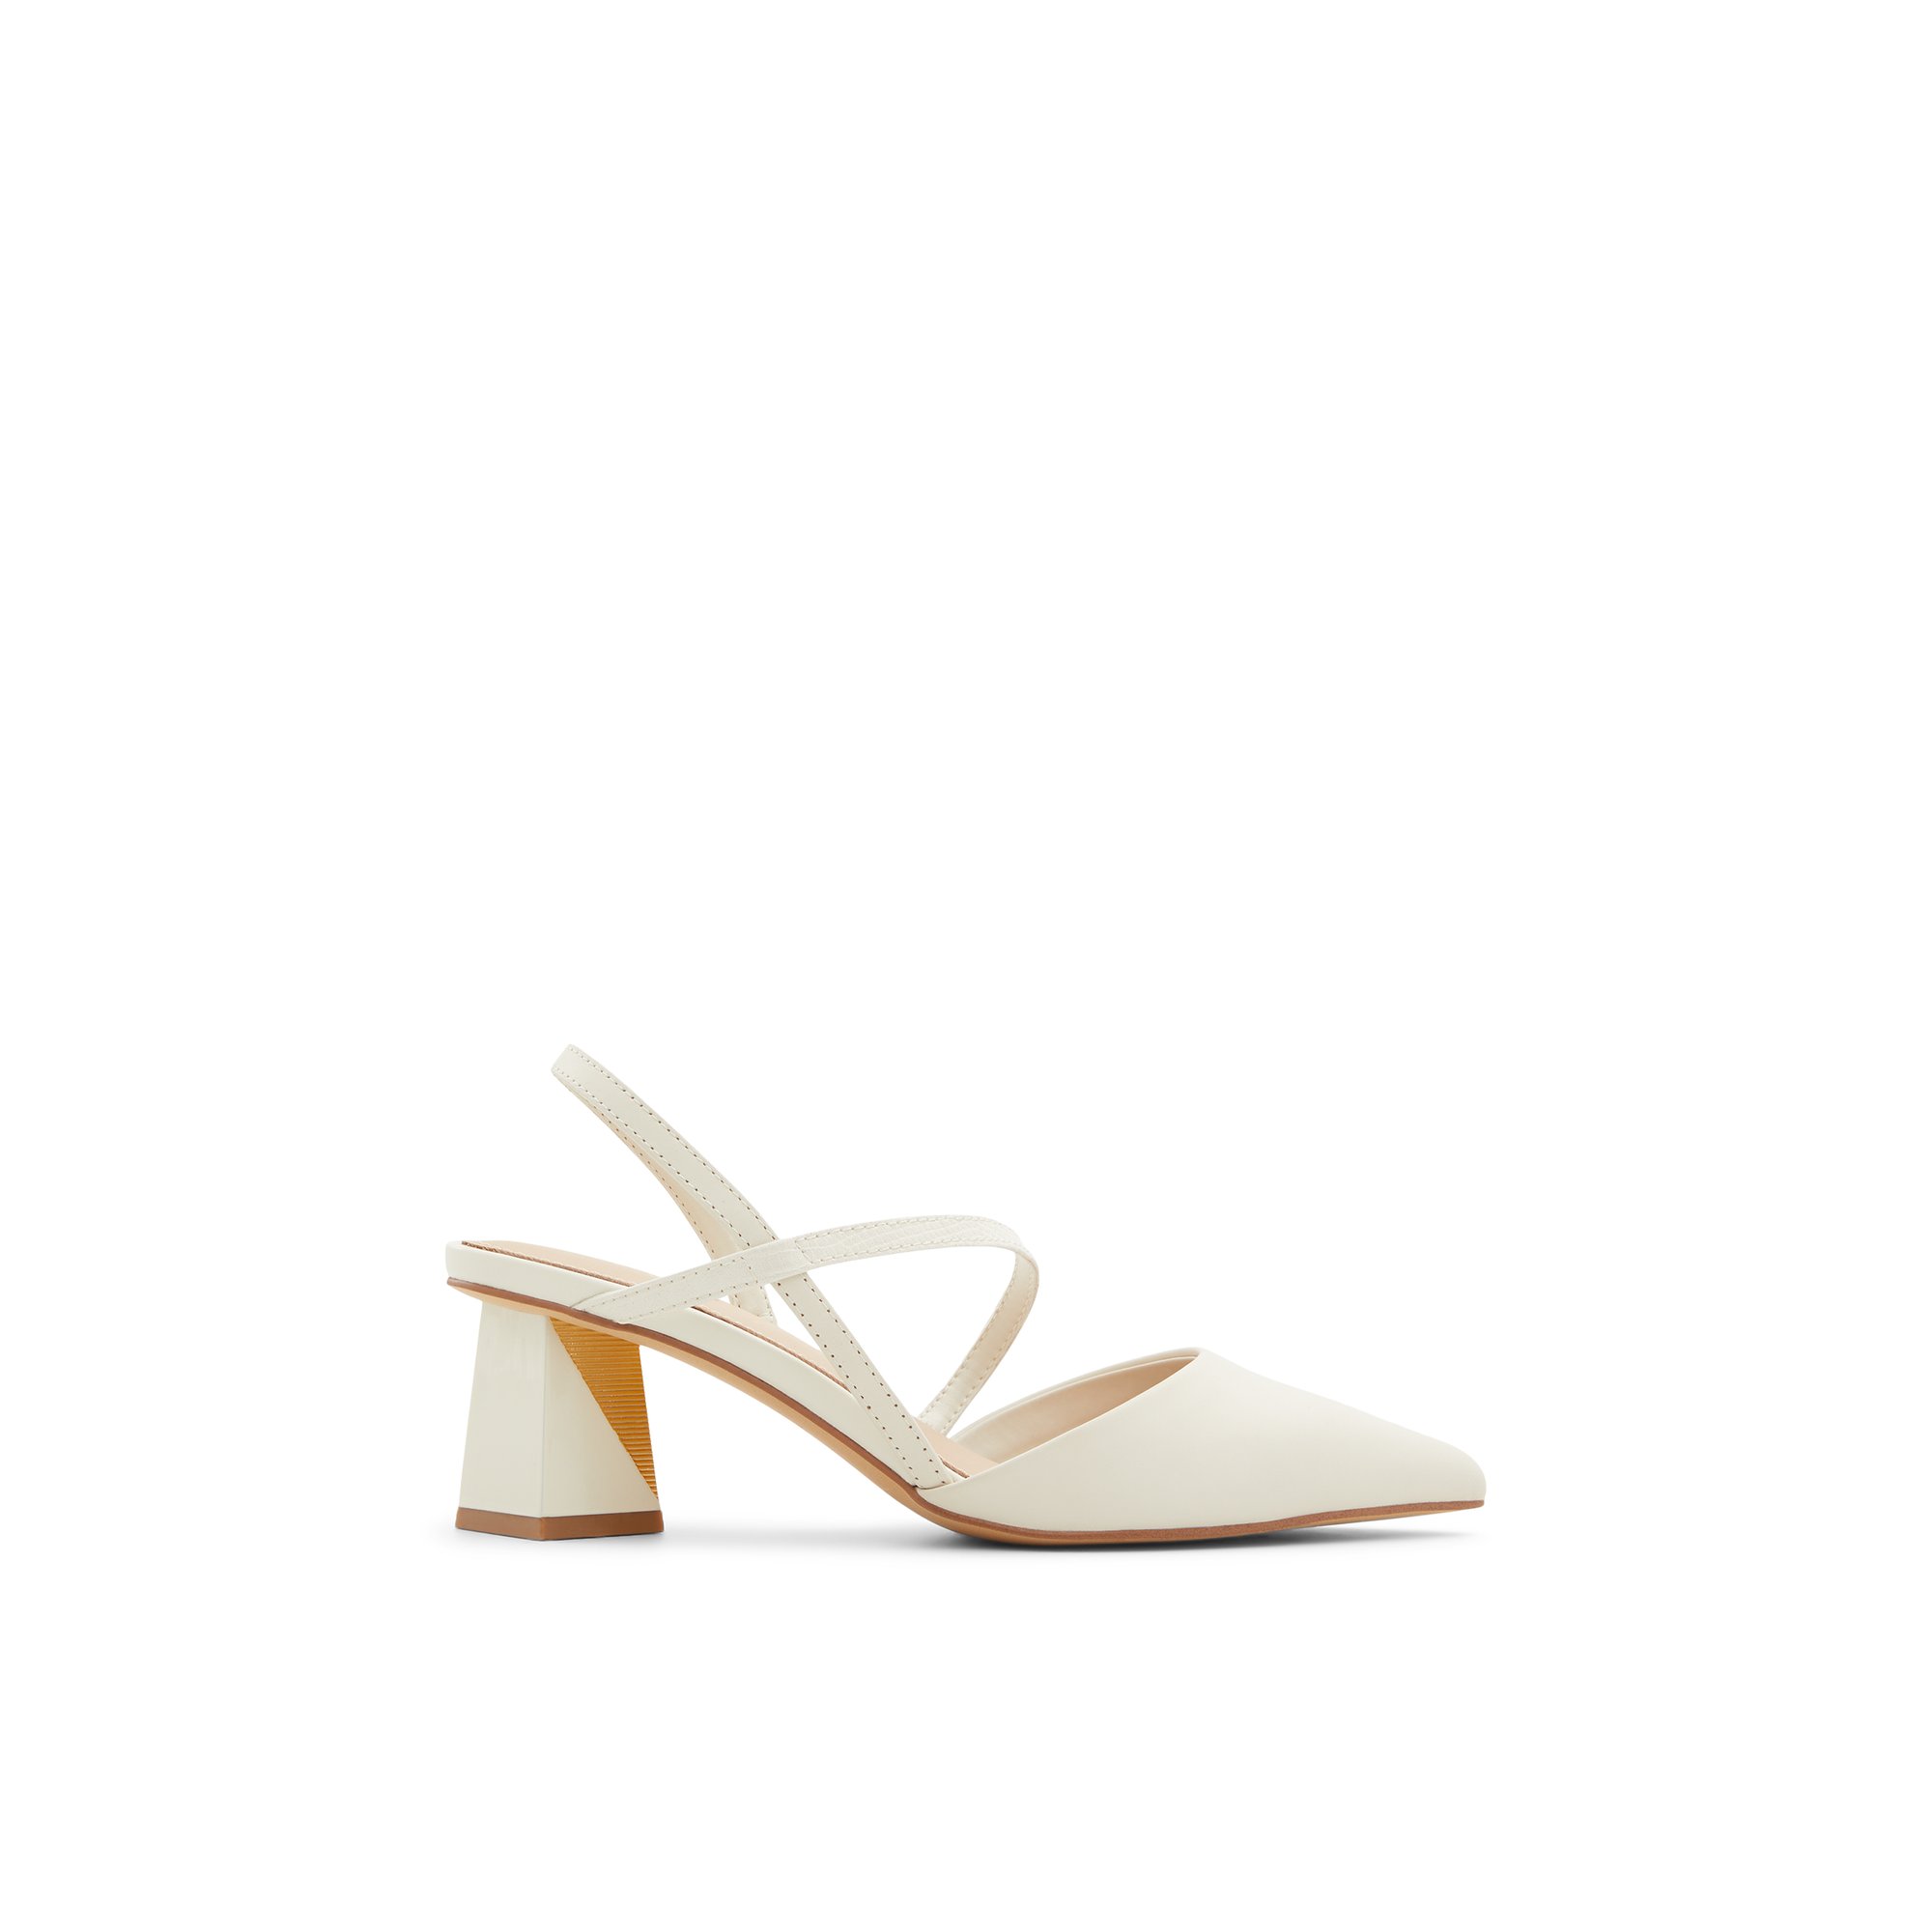 ALDO Suzette - Women's Heels Strappy - White